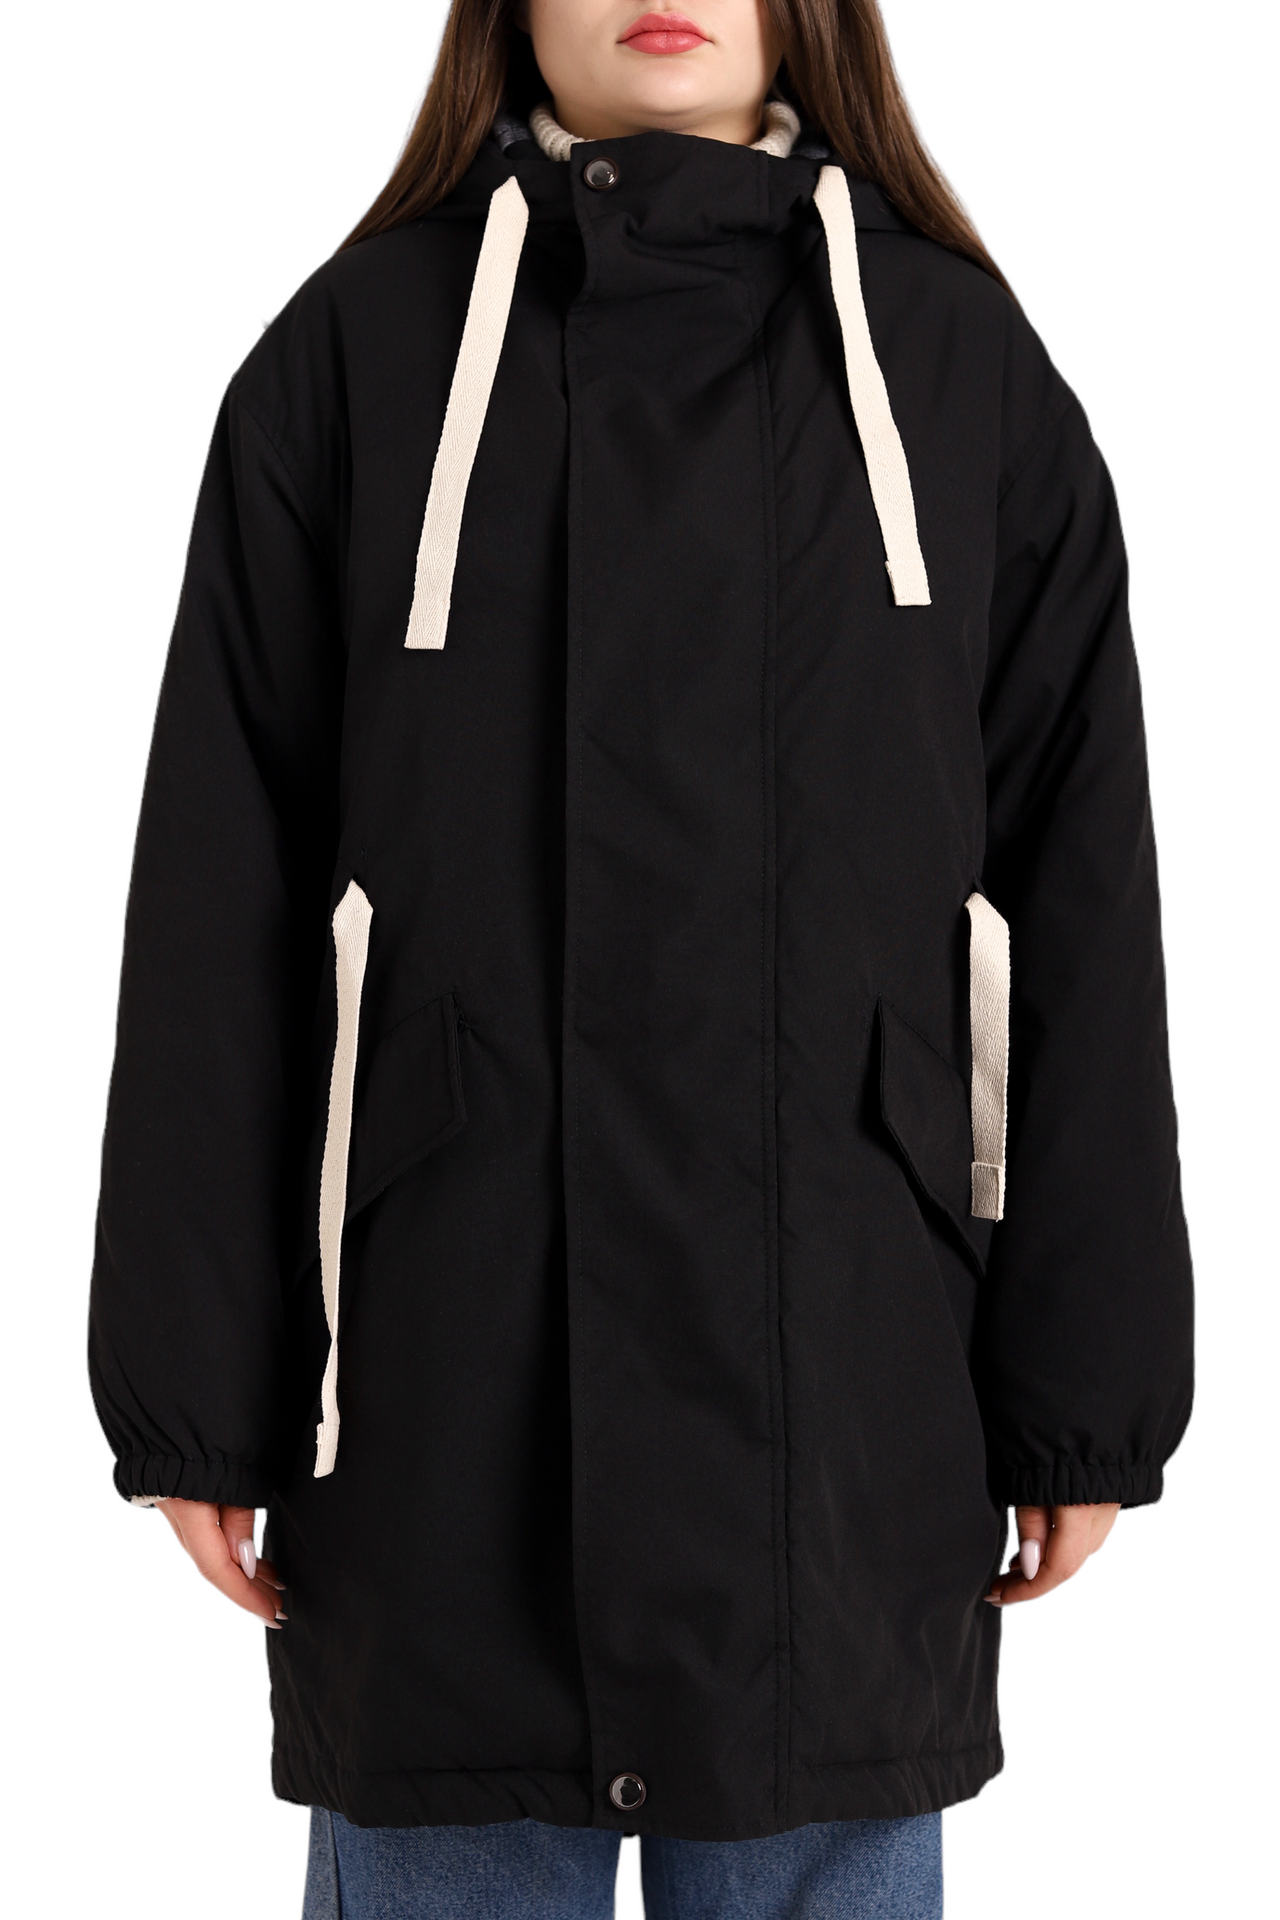 Acne Studios Puffer Coat Jacket Black